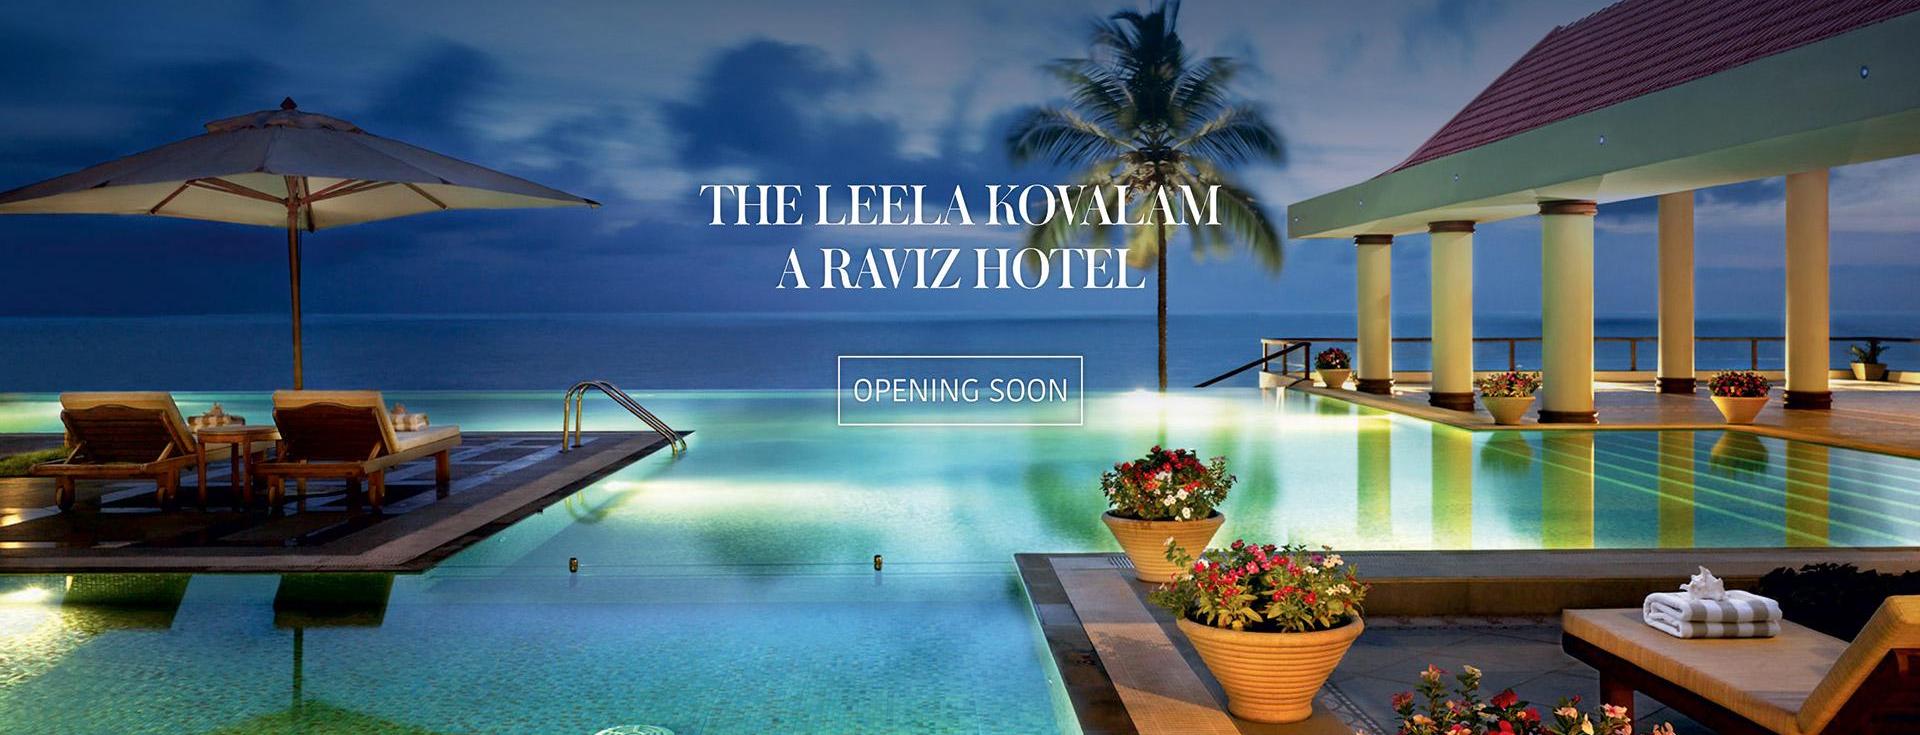 The Leela Kovalam, a Raviz Hotel